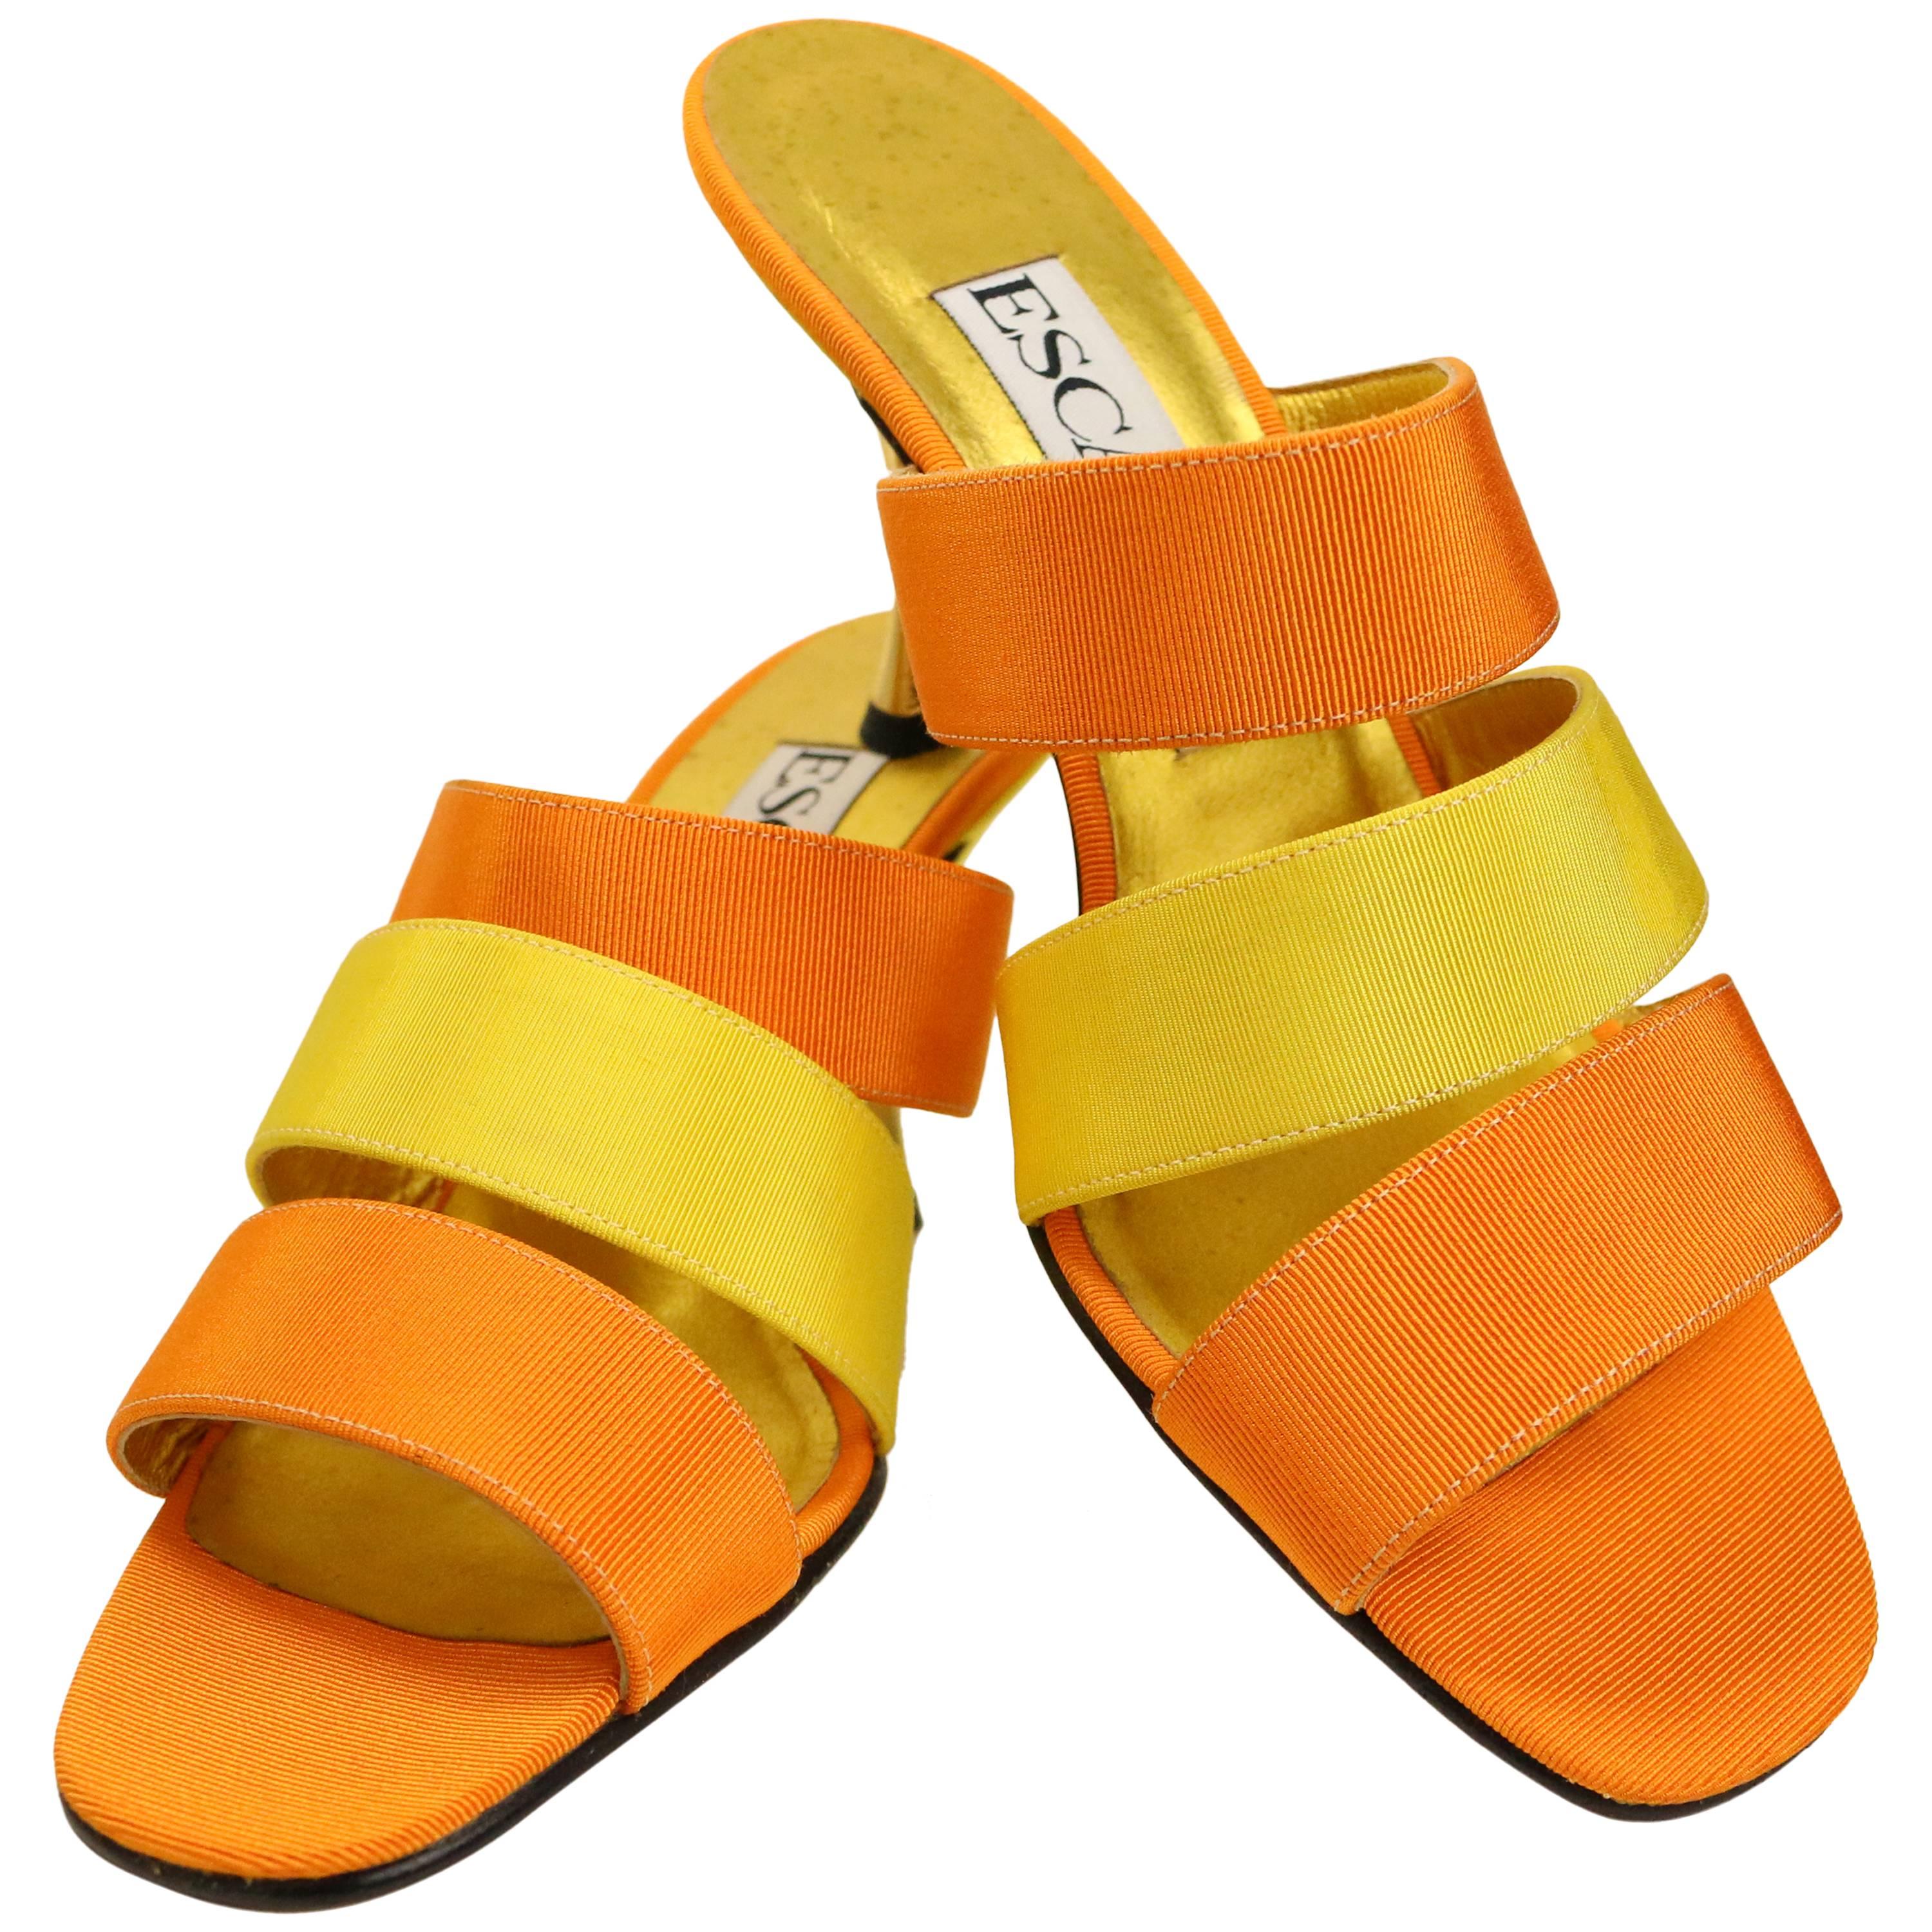 Escada Bi Tones Orange and Yellow Straps Sandals Heels 